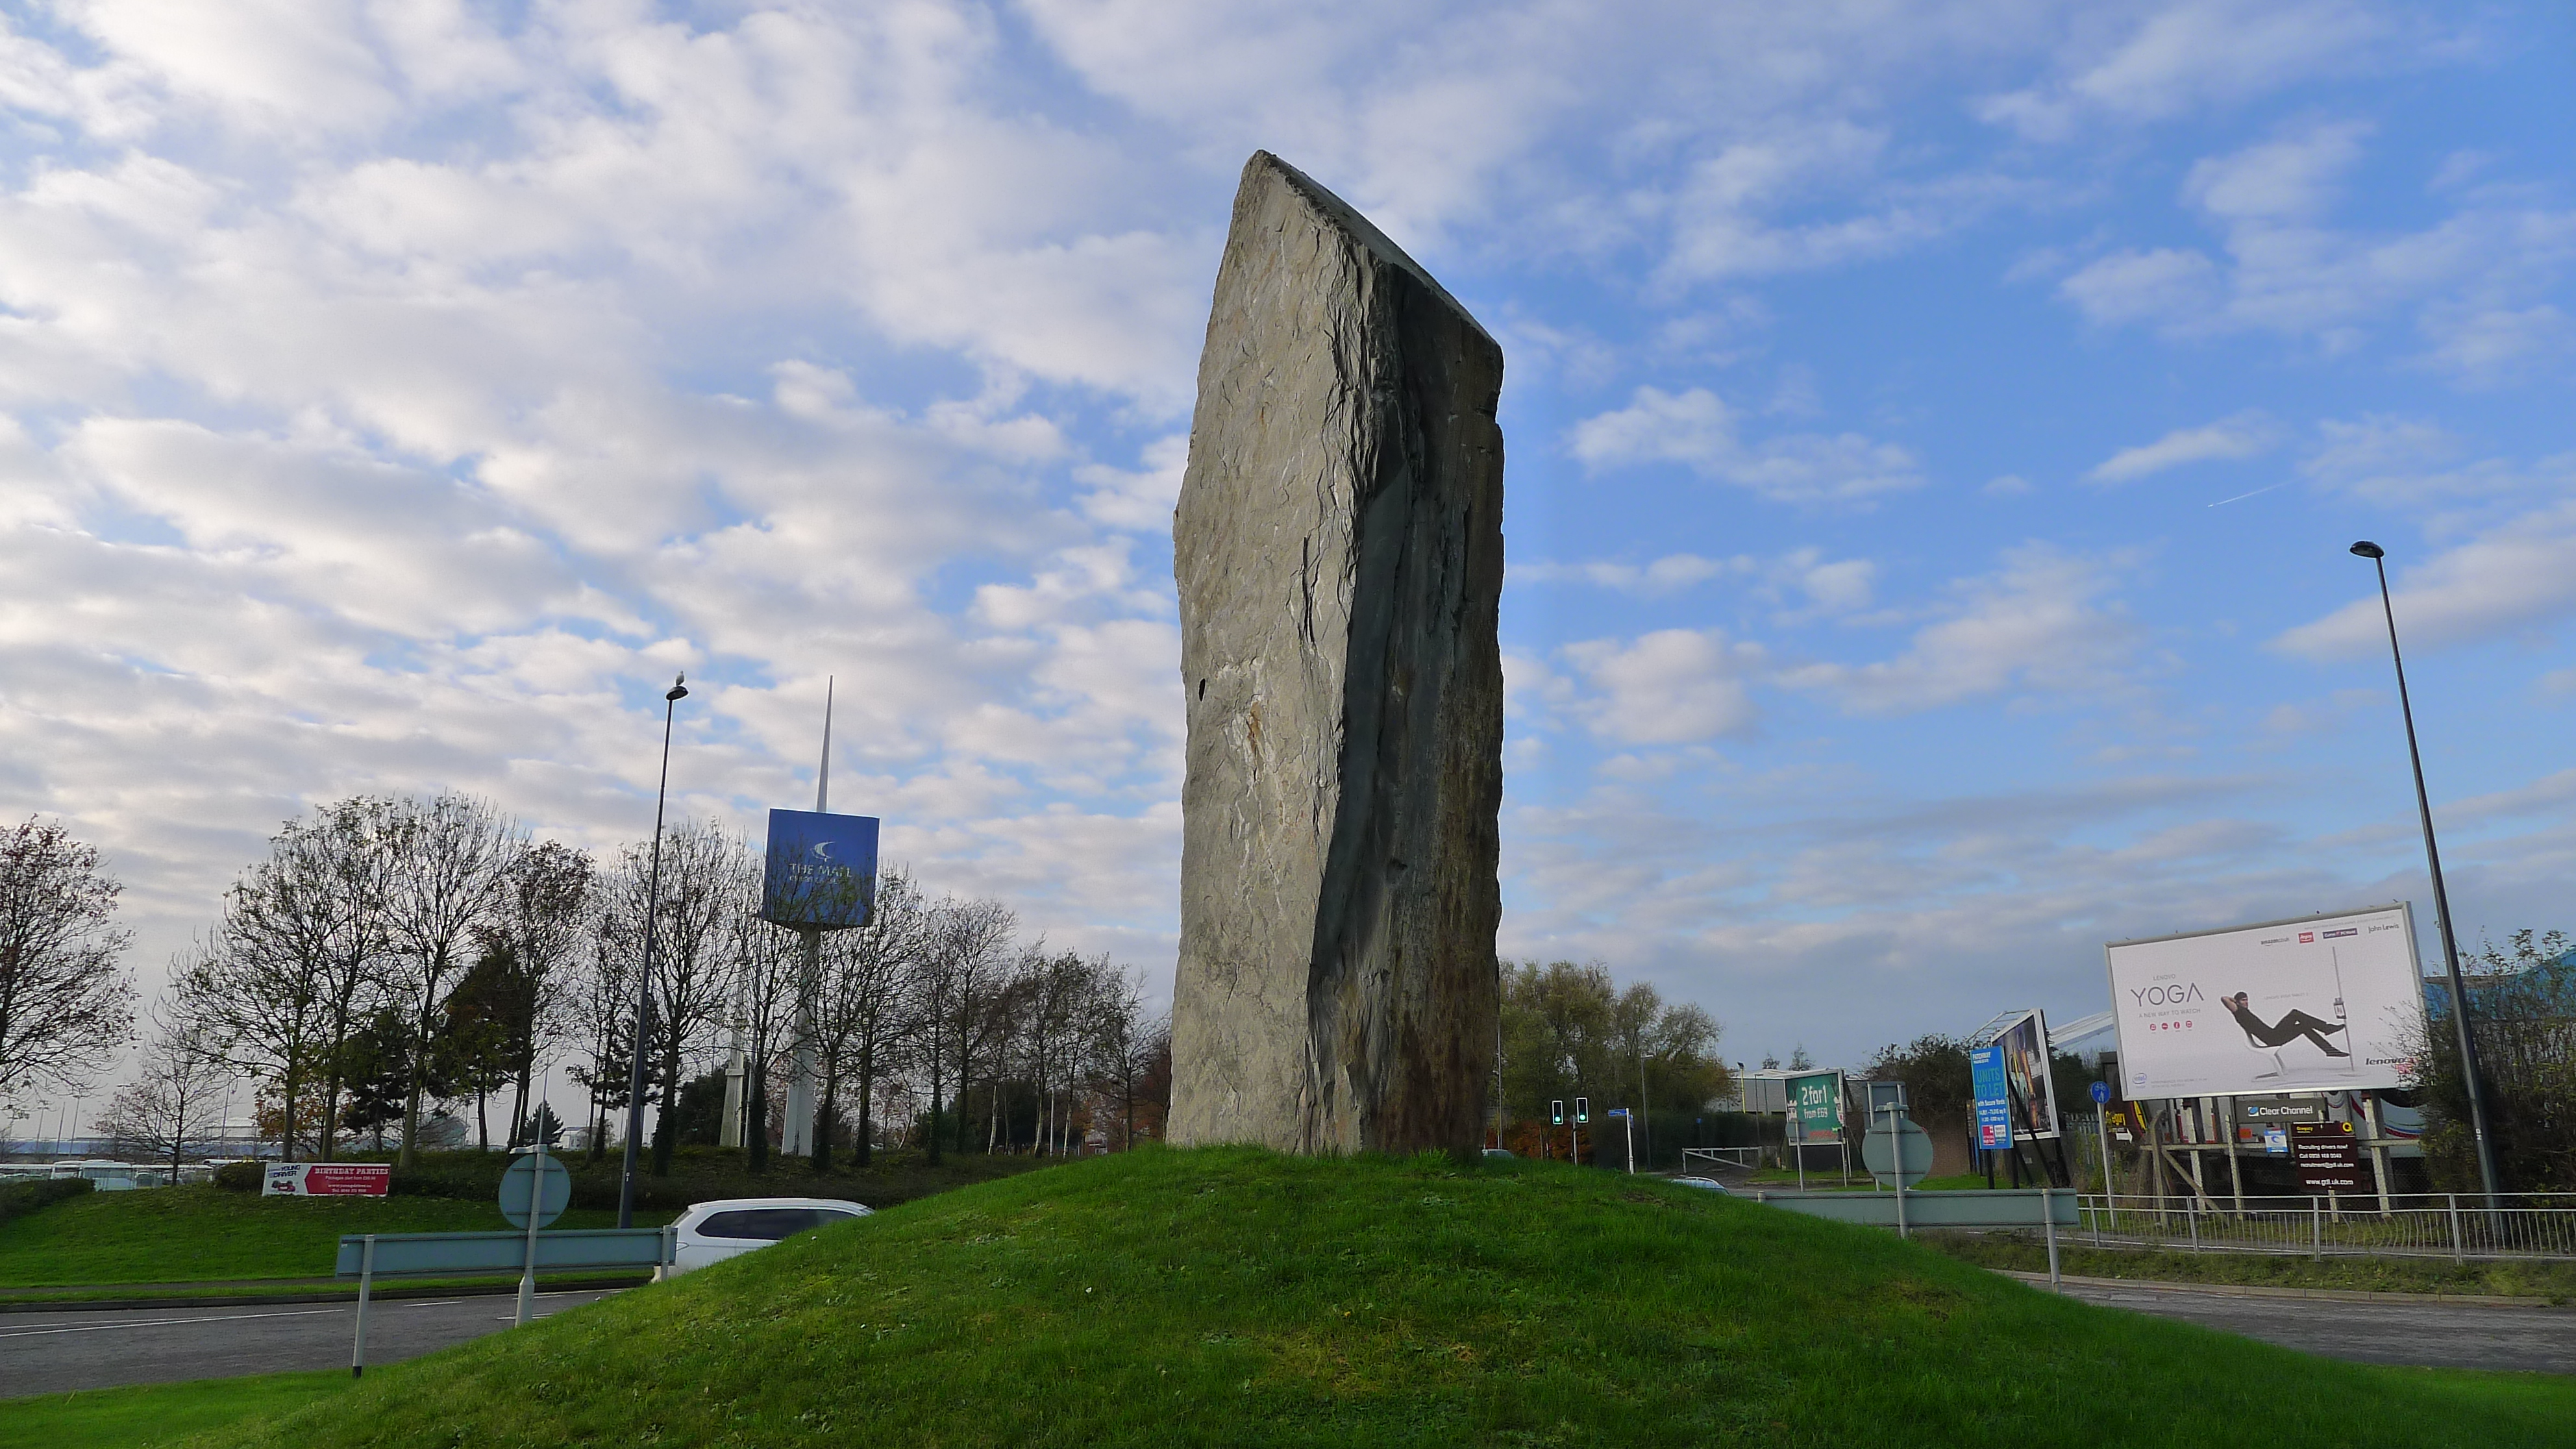 The Monoliths of Cribbs Causeway Car Park, Bristol